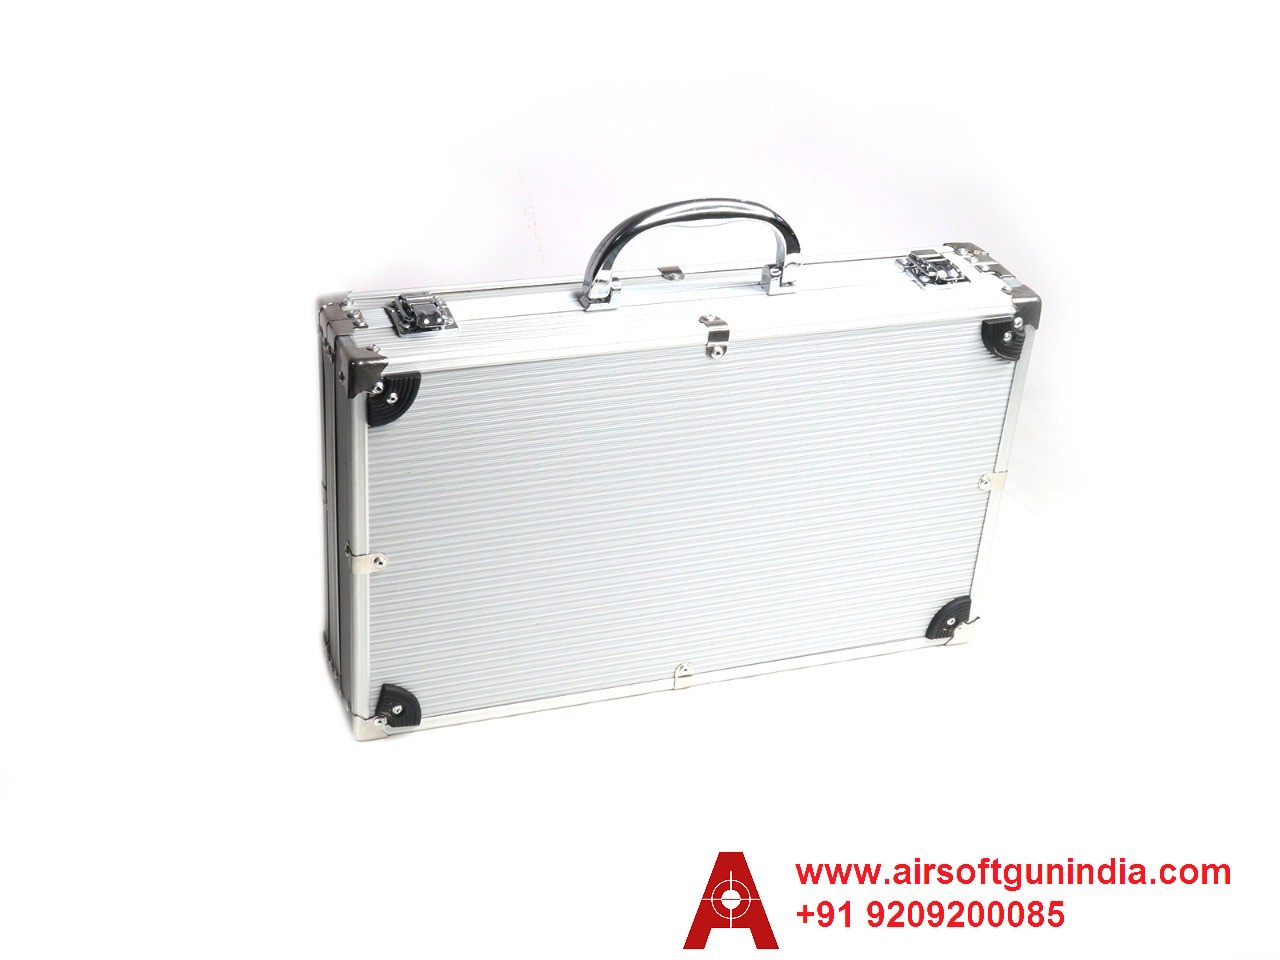 Customized Storage Gun Box With Latch By Airsoft Gun India